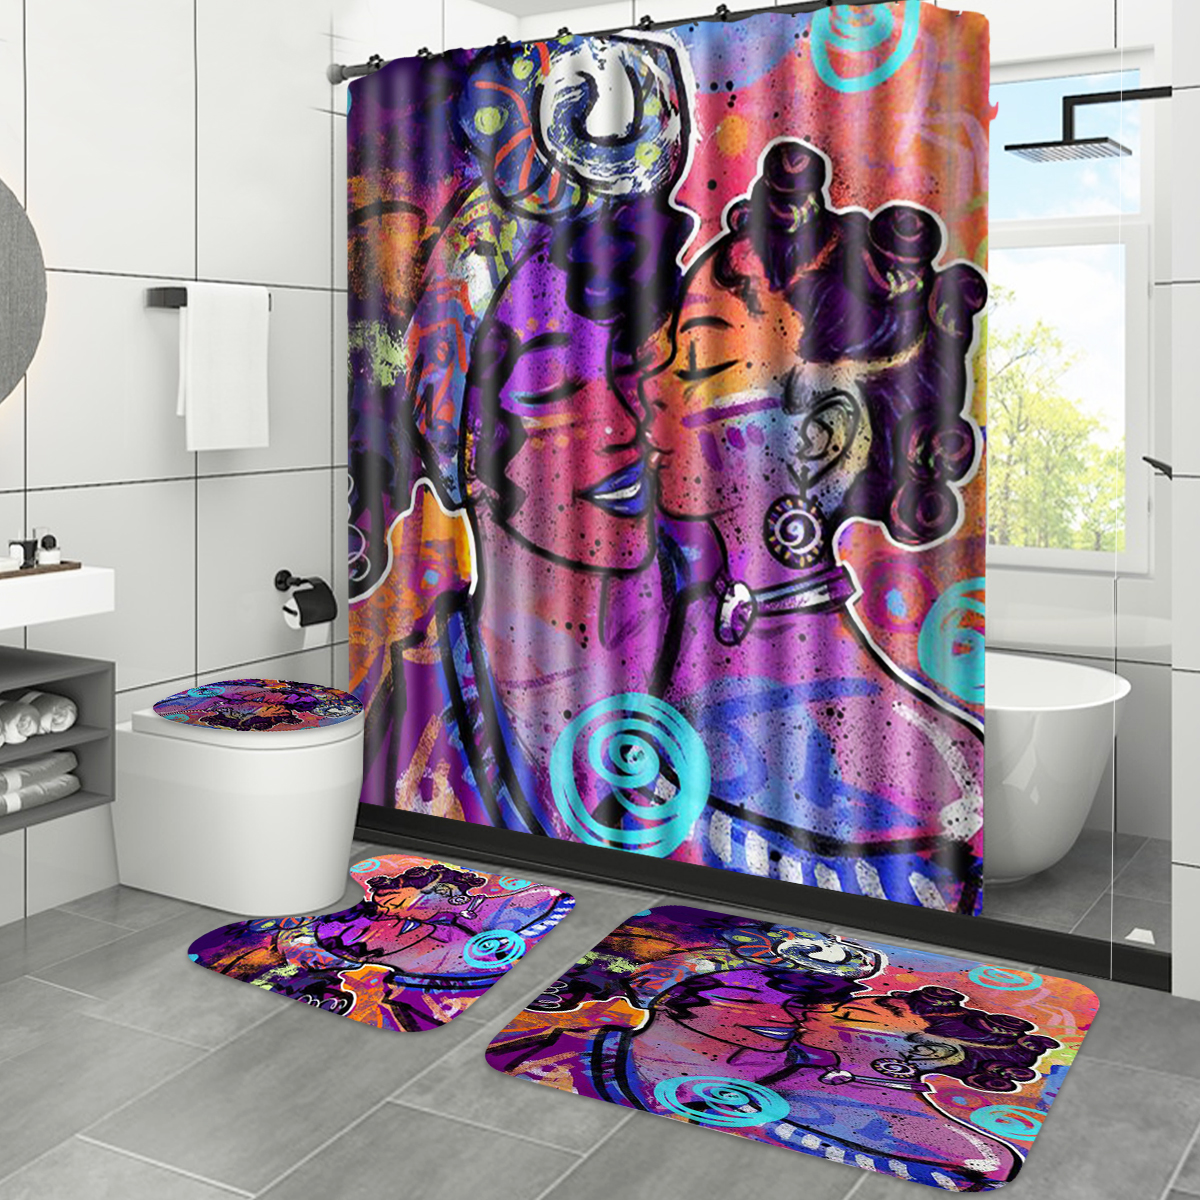 Bathroom-Shower-Curtain-Bath-Mat-Toilet-Cover-Rug-Decor-Set-Non-Slip-Waterproof-1814610-2